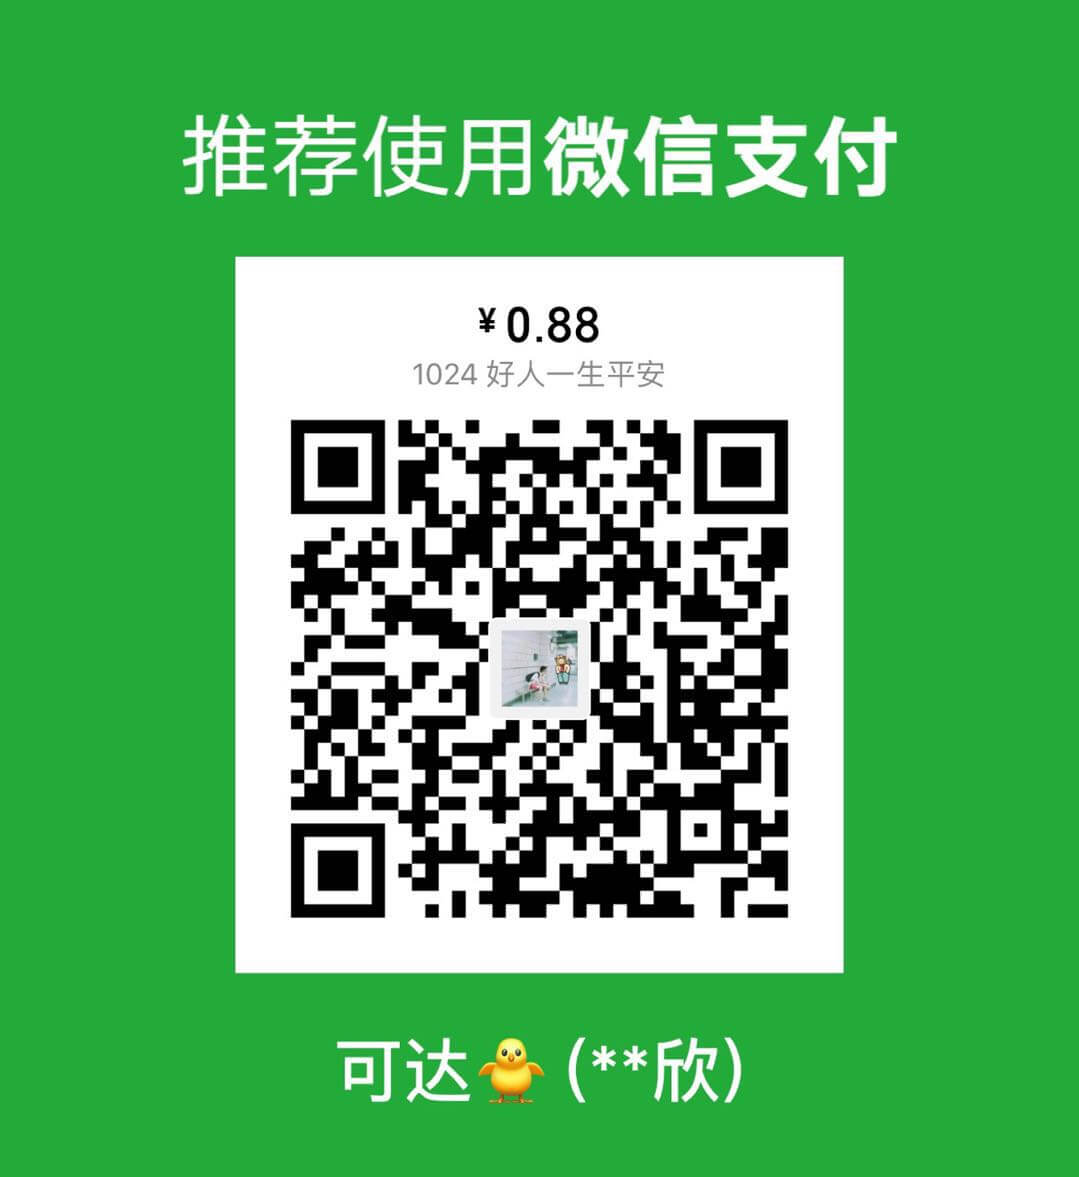 Jsonz WeChat Pay